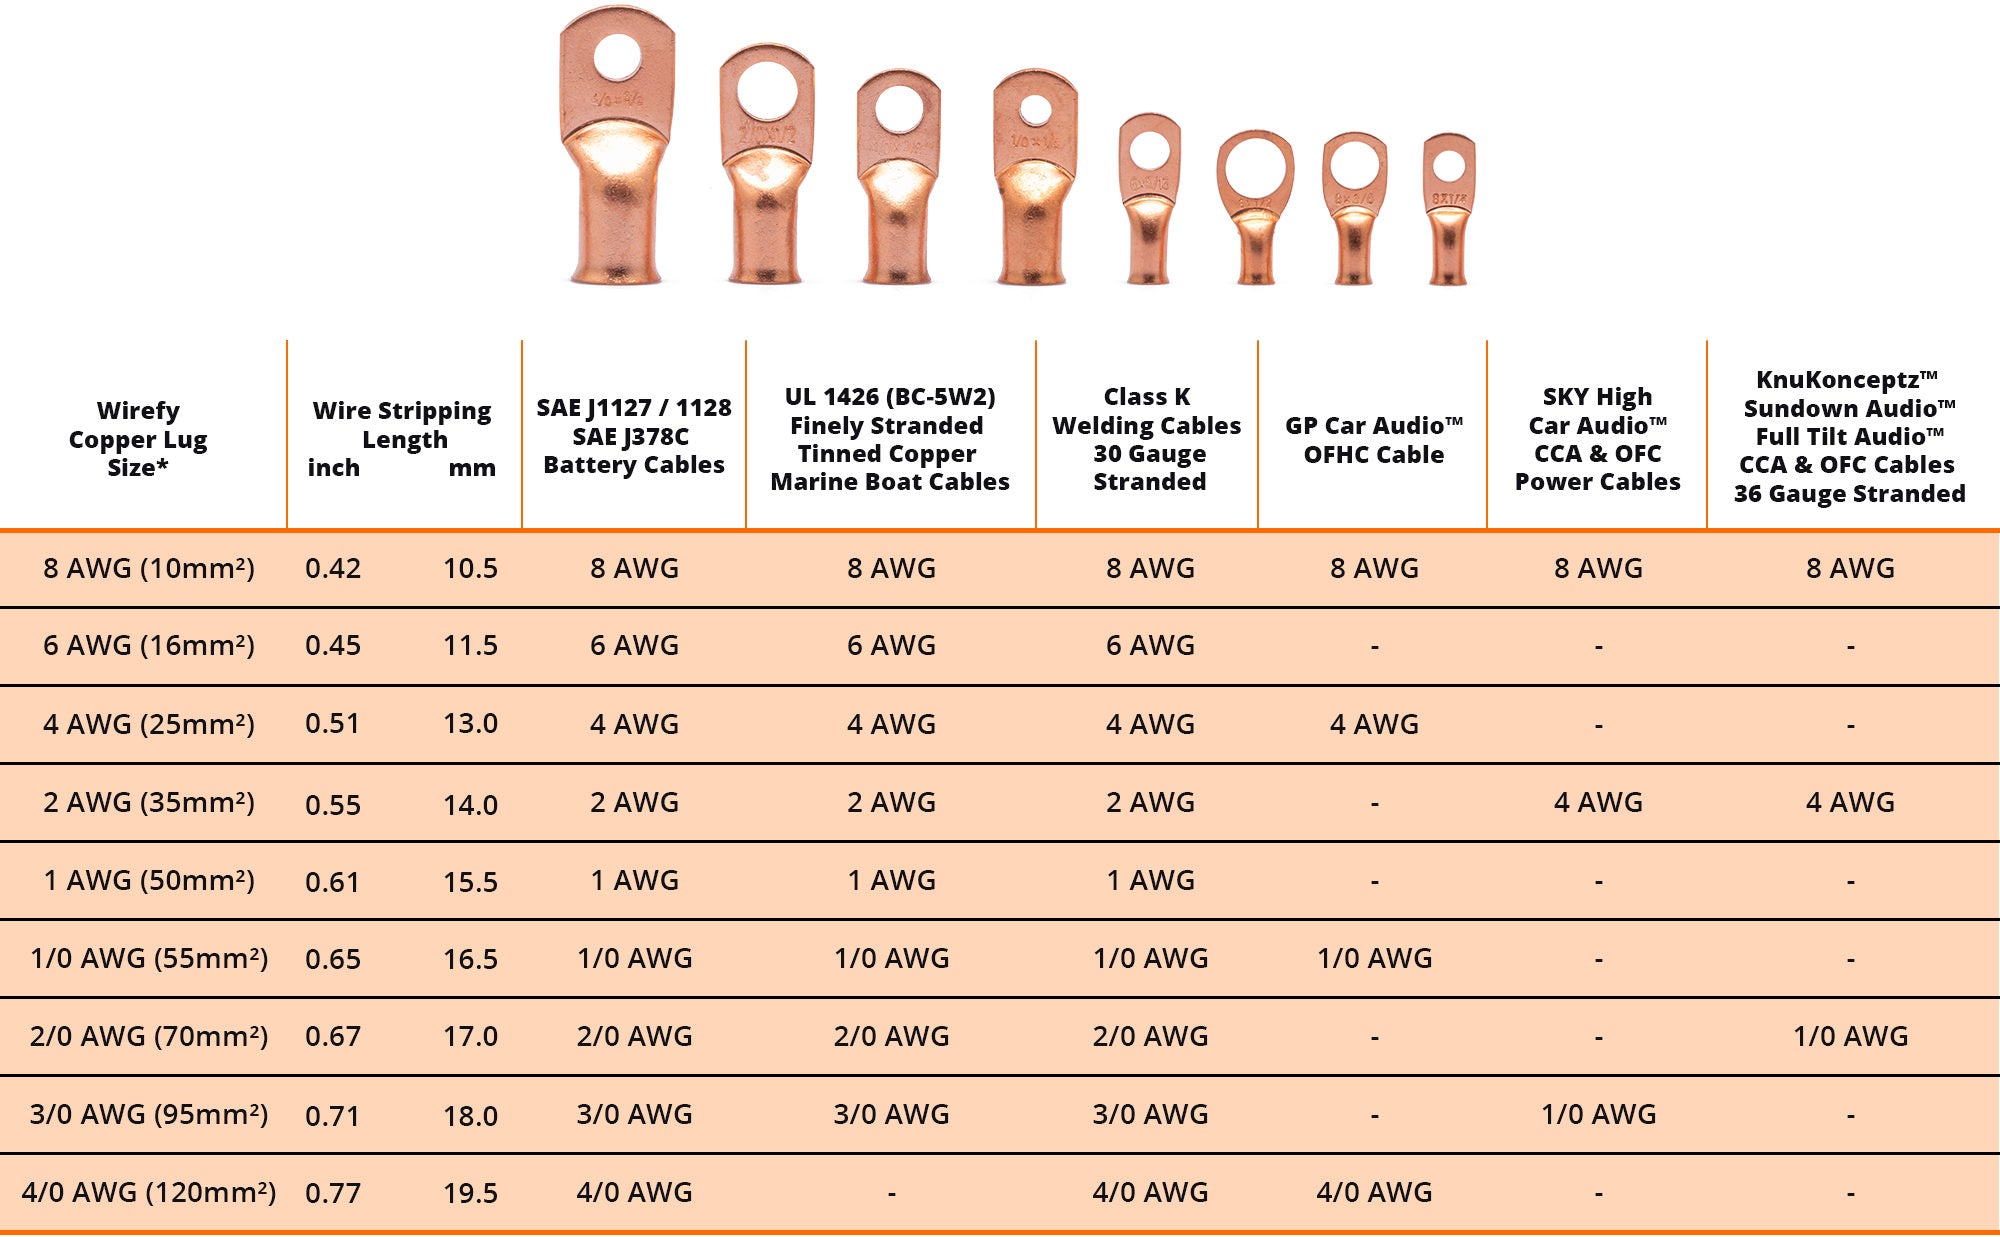 wirefy copper lugs size chart